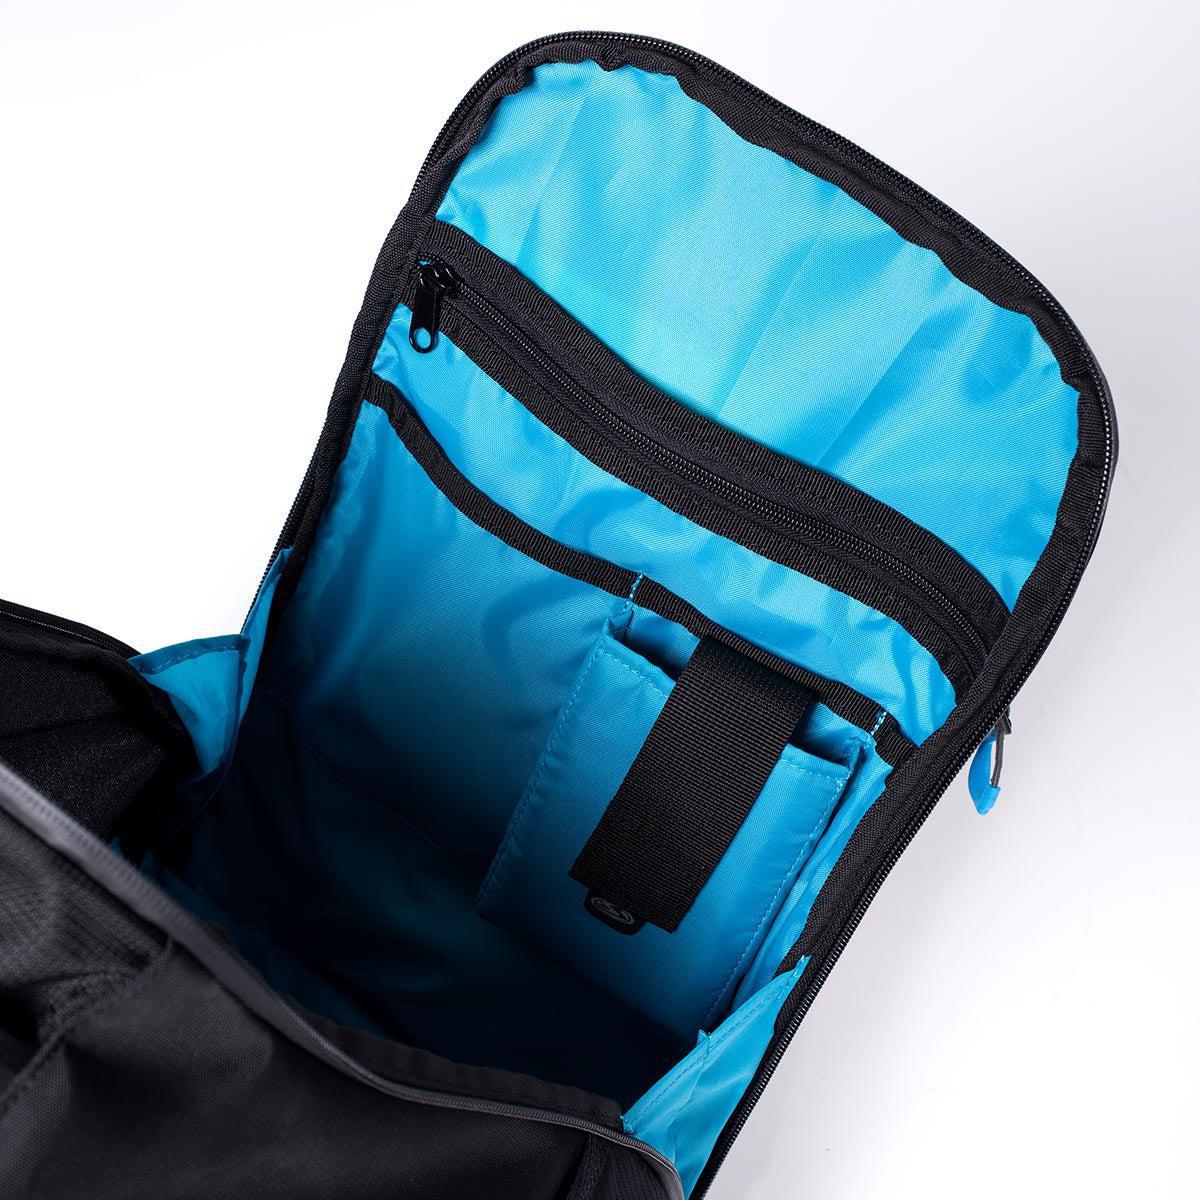 Stahlsac STEEL Backpack Bag Black-